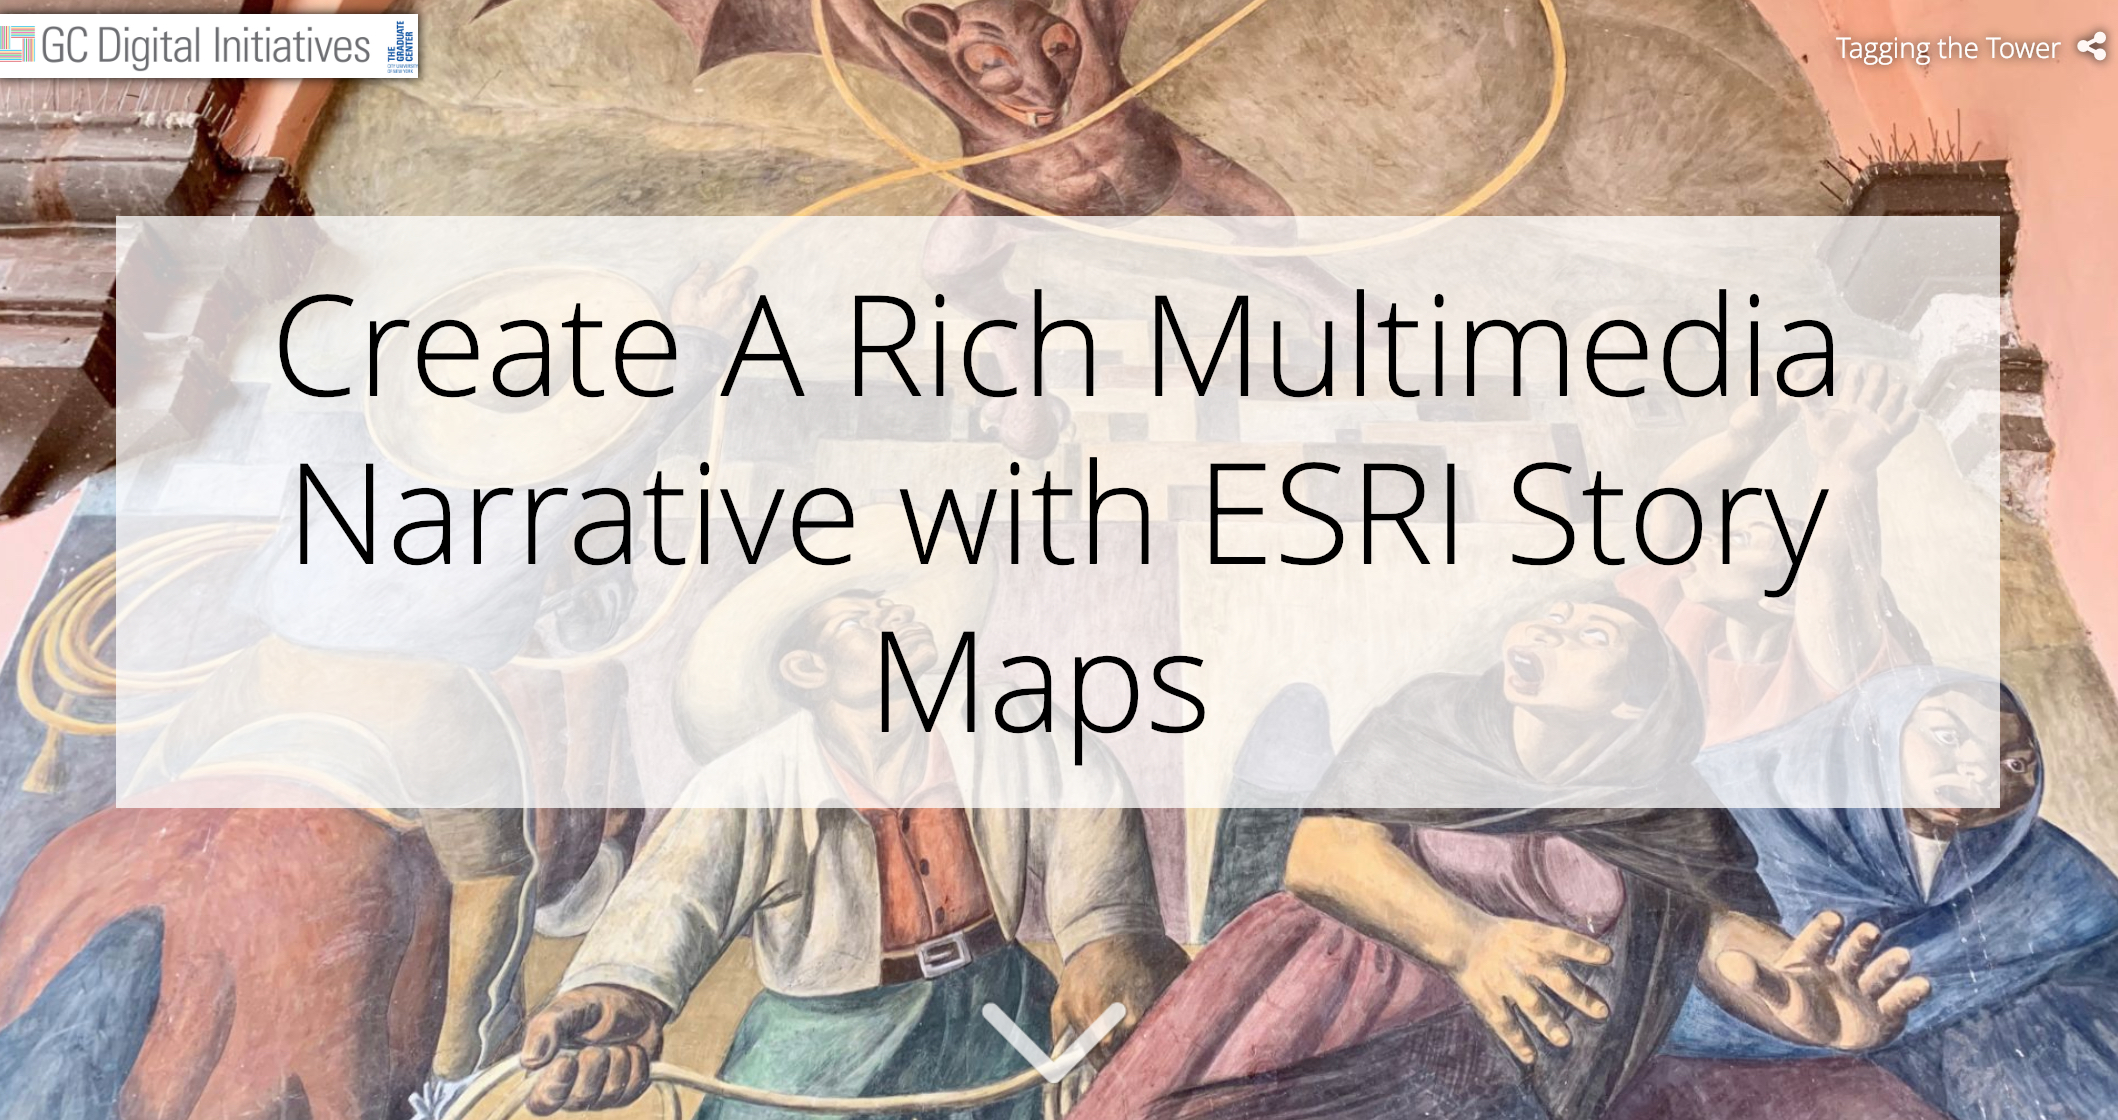 Create A Rich Multimedia Narrative with ESRI Story Maps